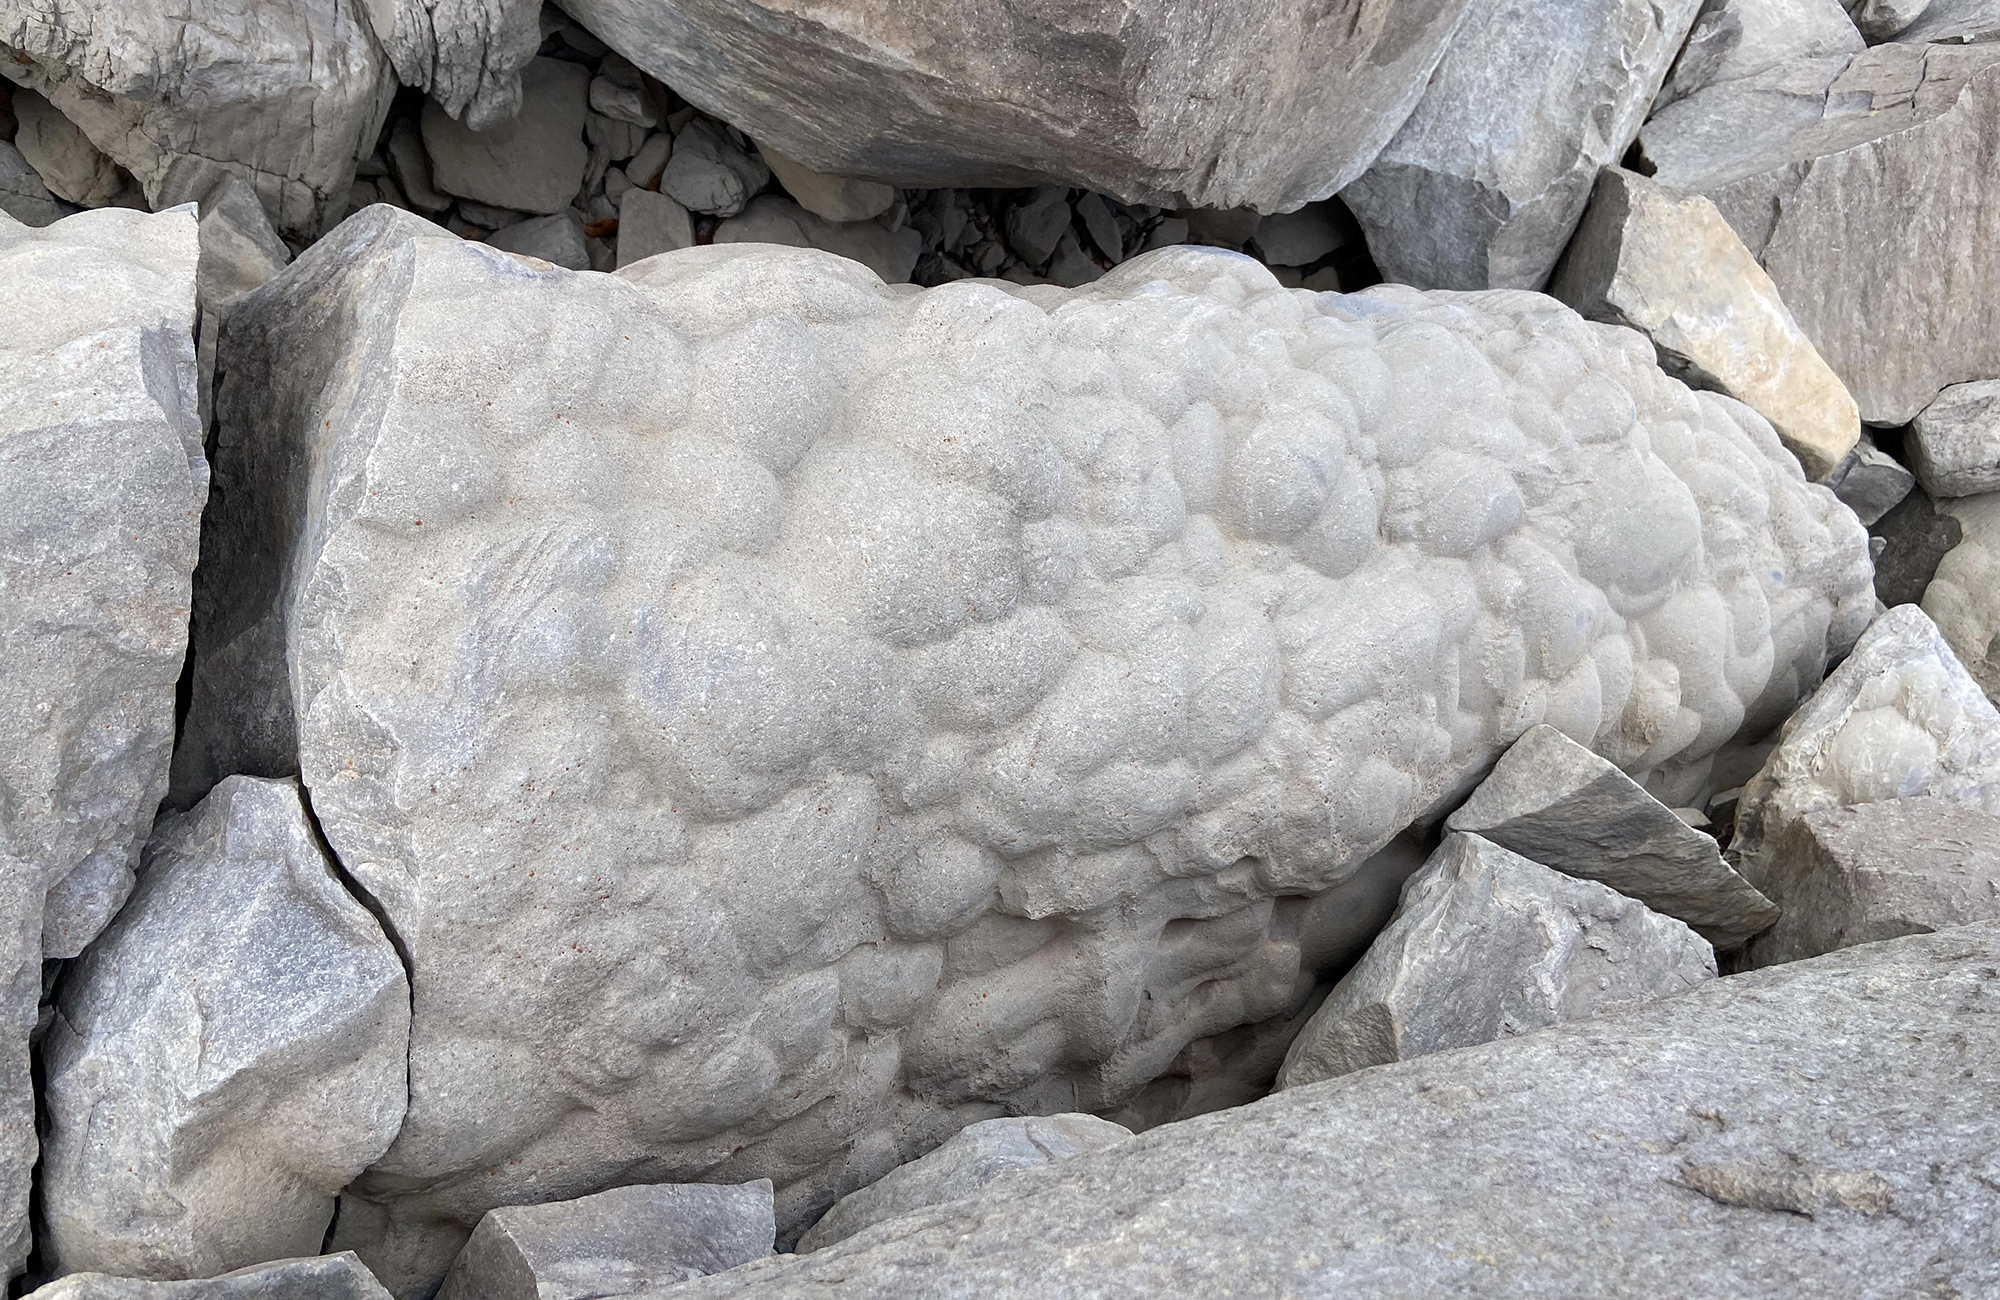 A pile of broken, white rocks.